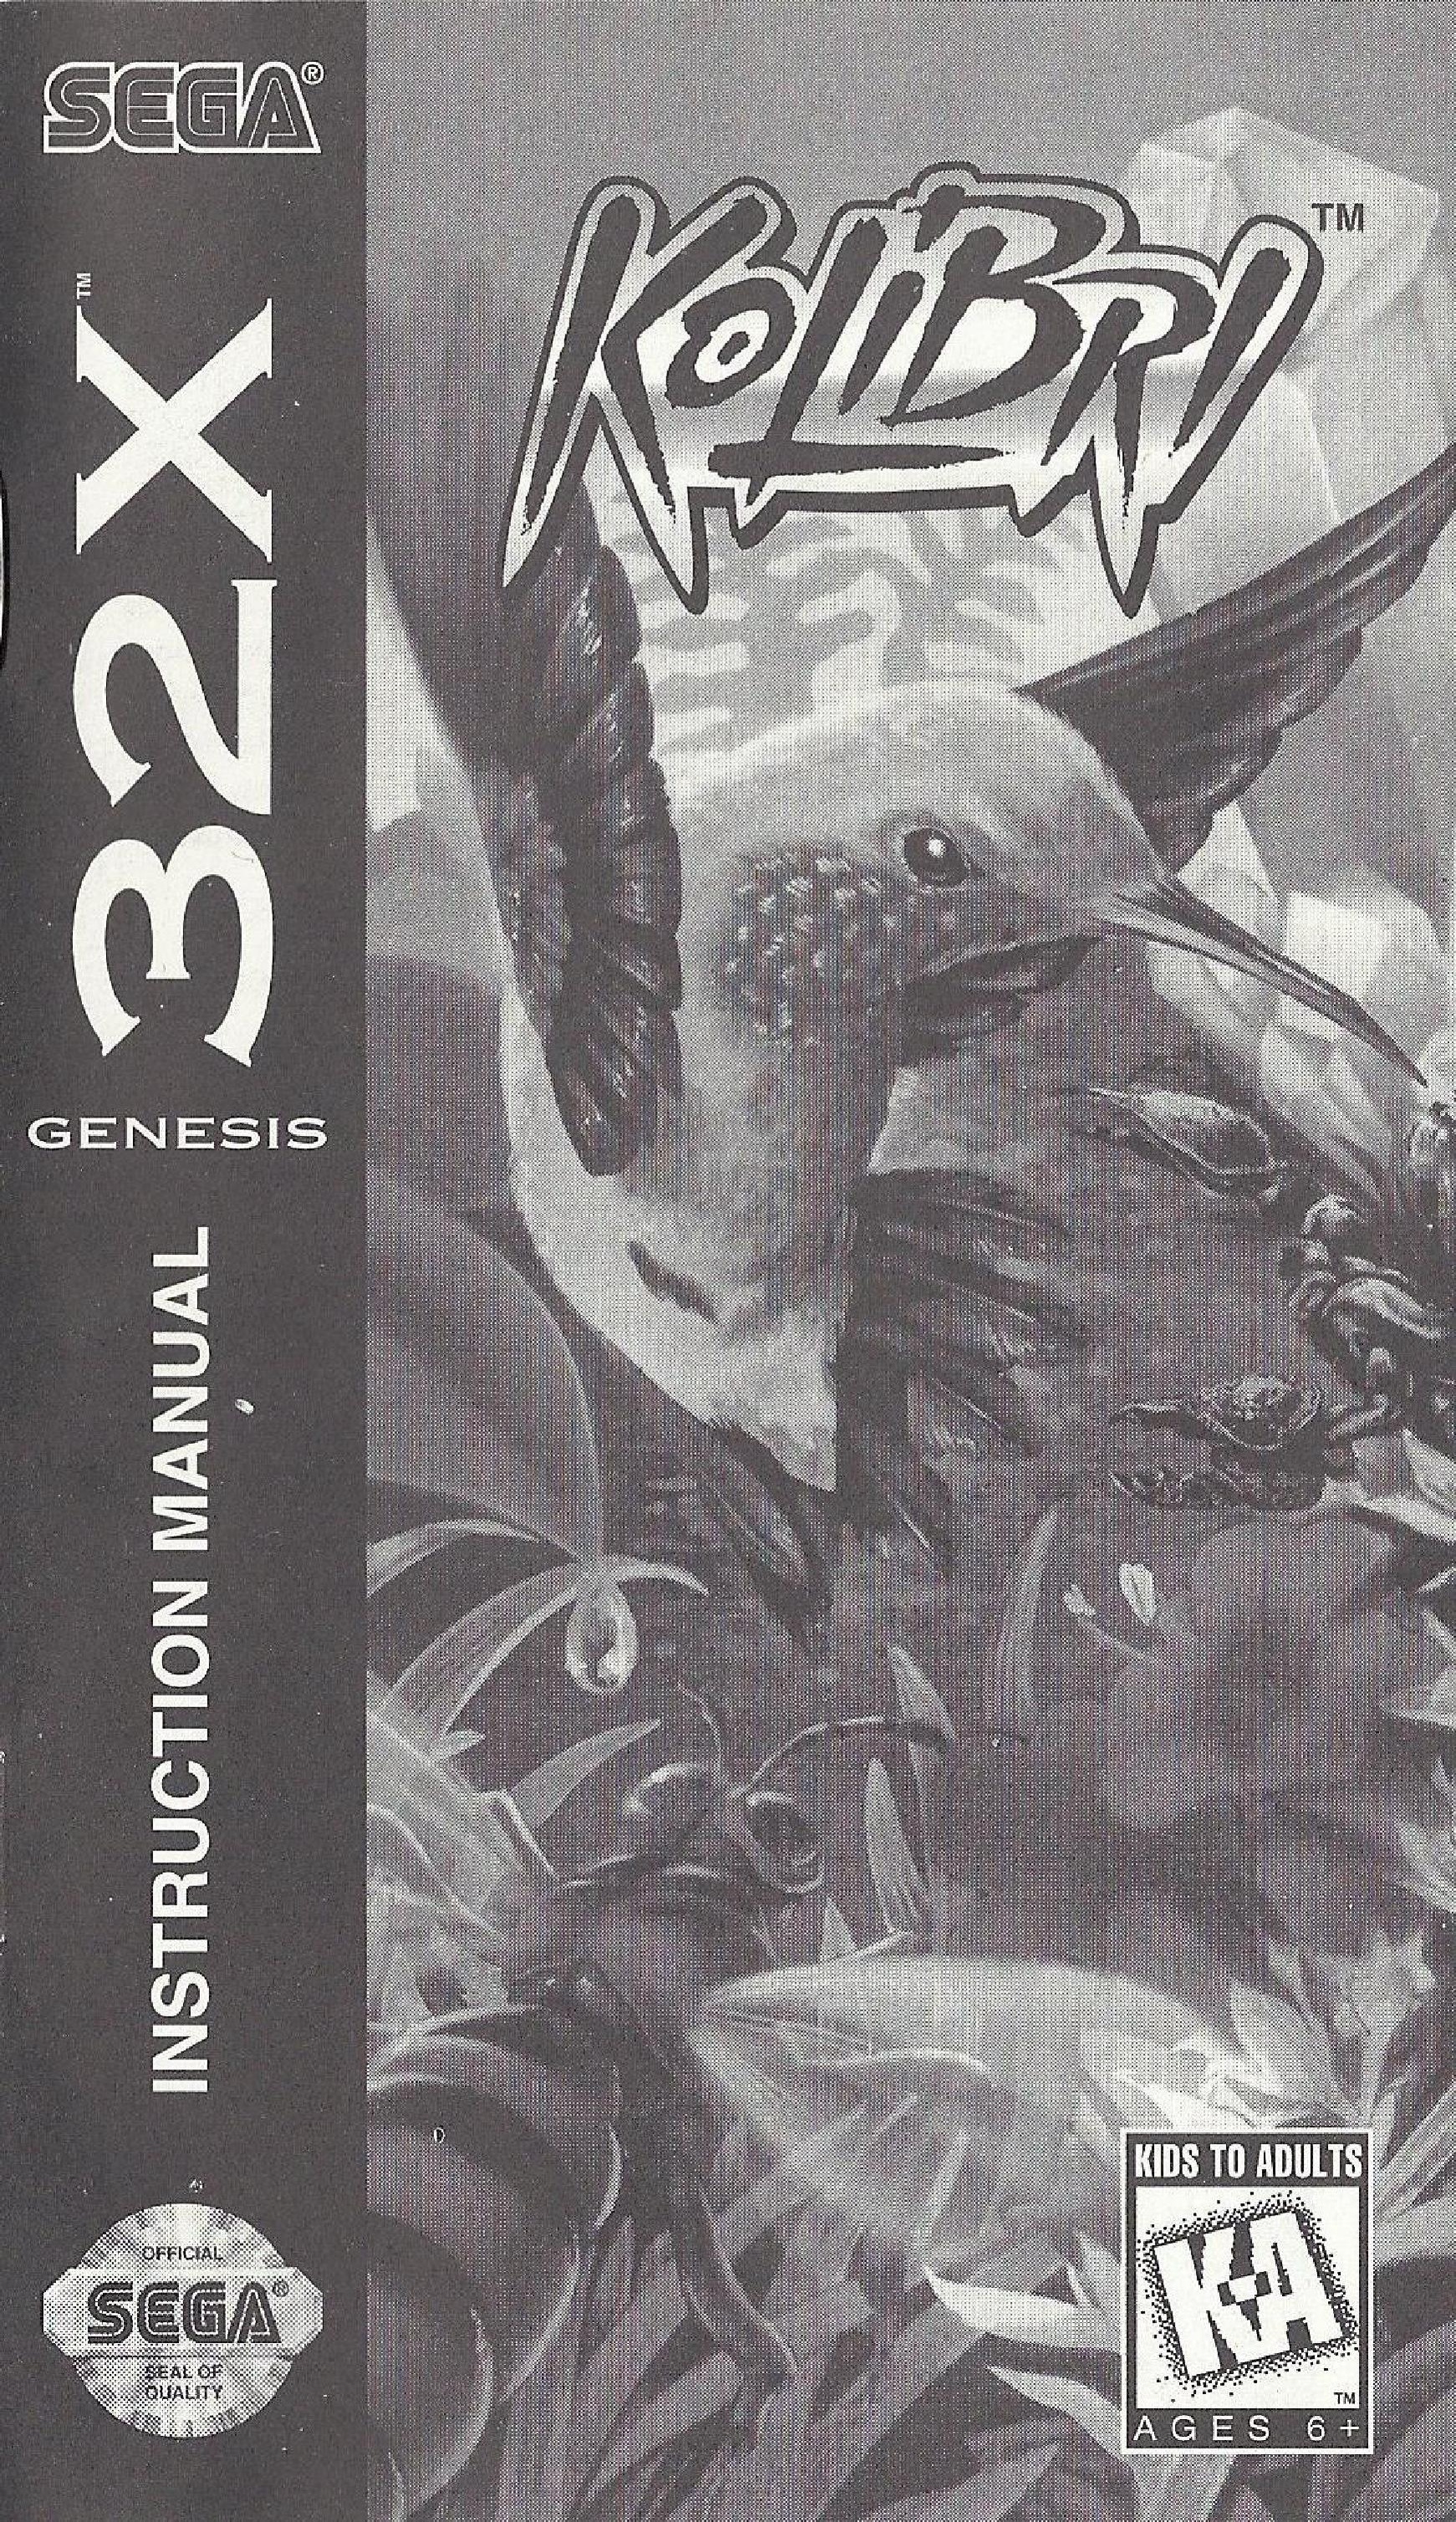 Kolibri 32x us manual.pdf